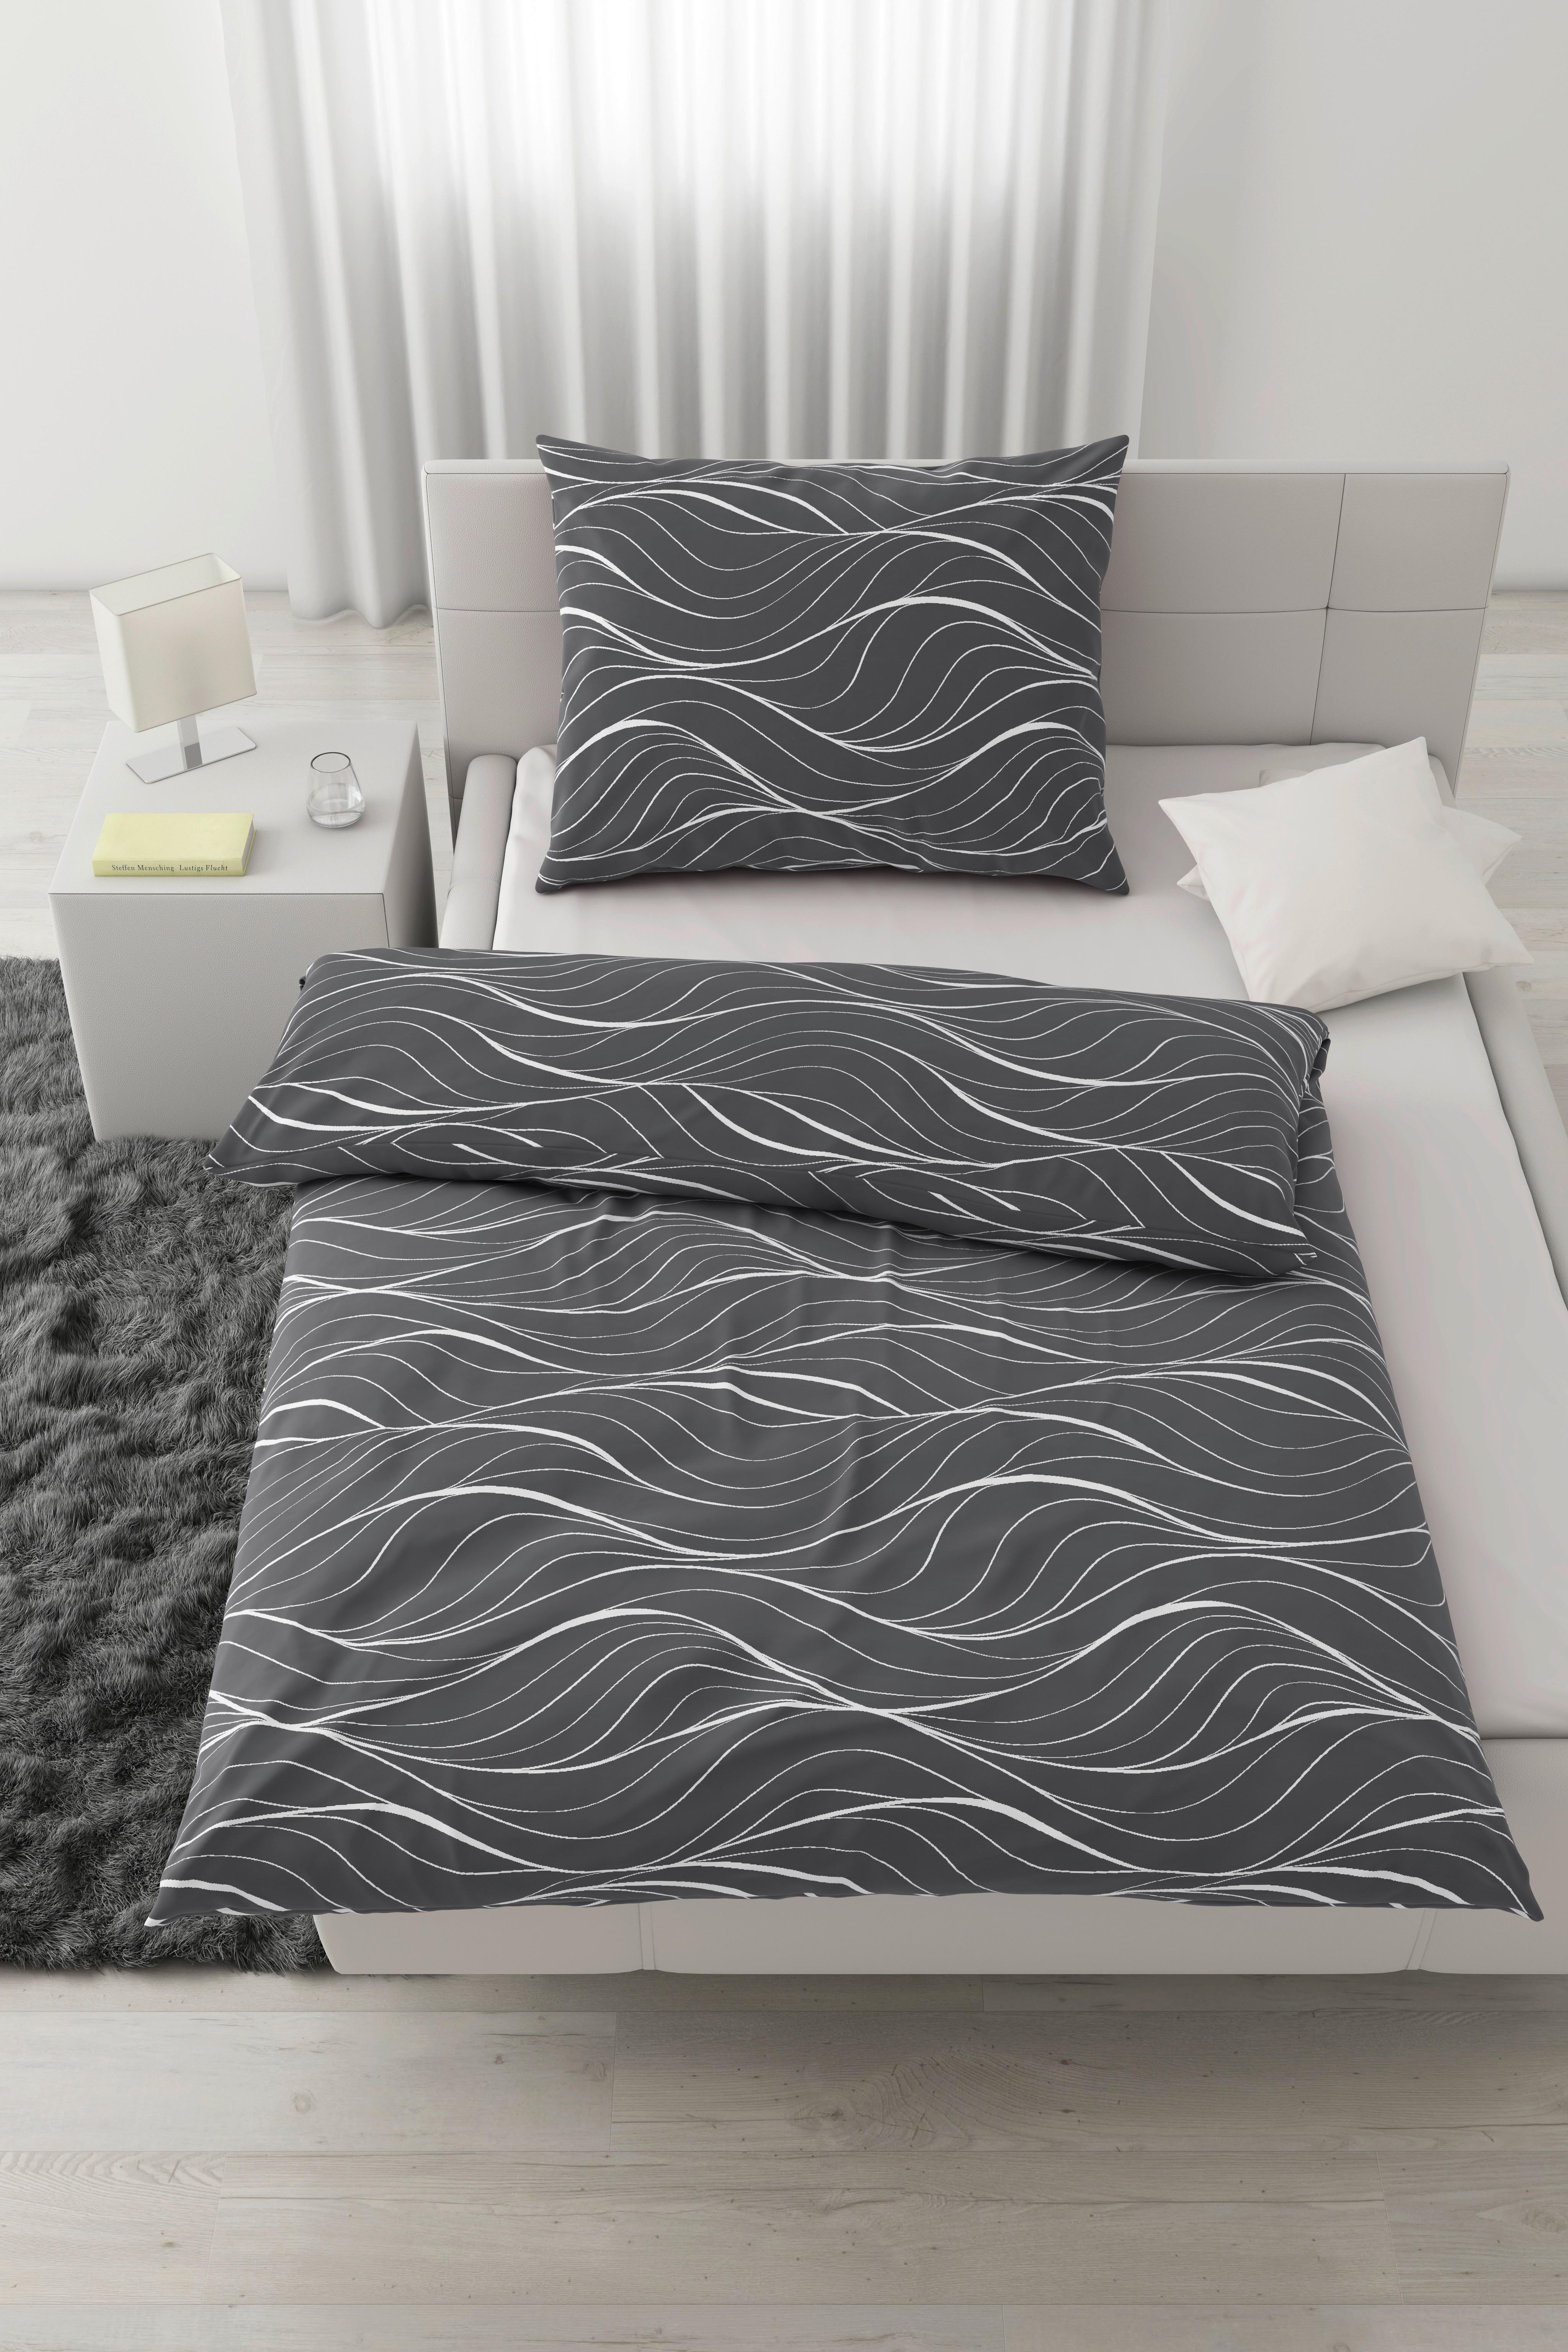 Posteľná Bielizeň Waves, 70/90 140/200cm - antracitová, textil (140/200cm) - Modern Living